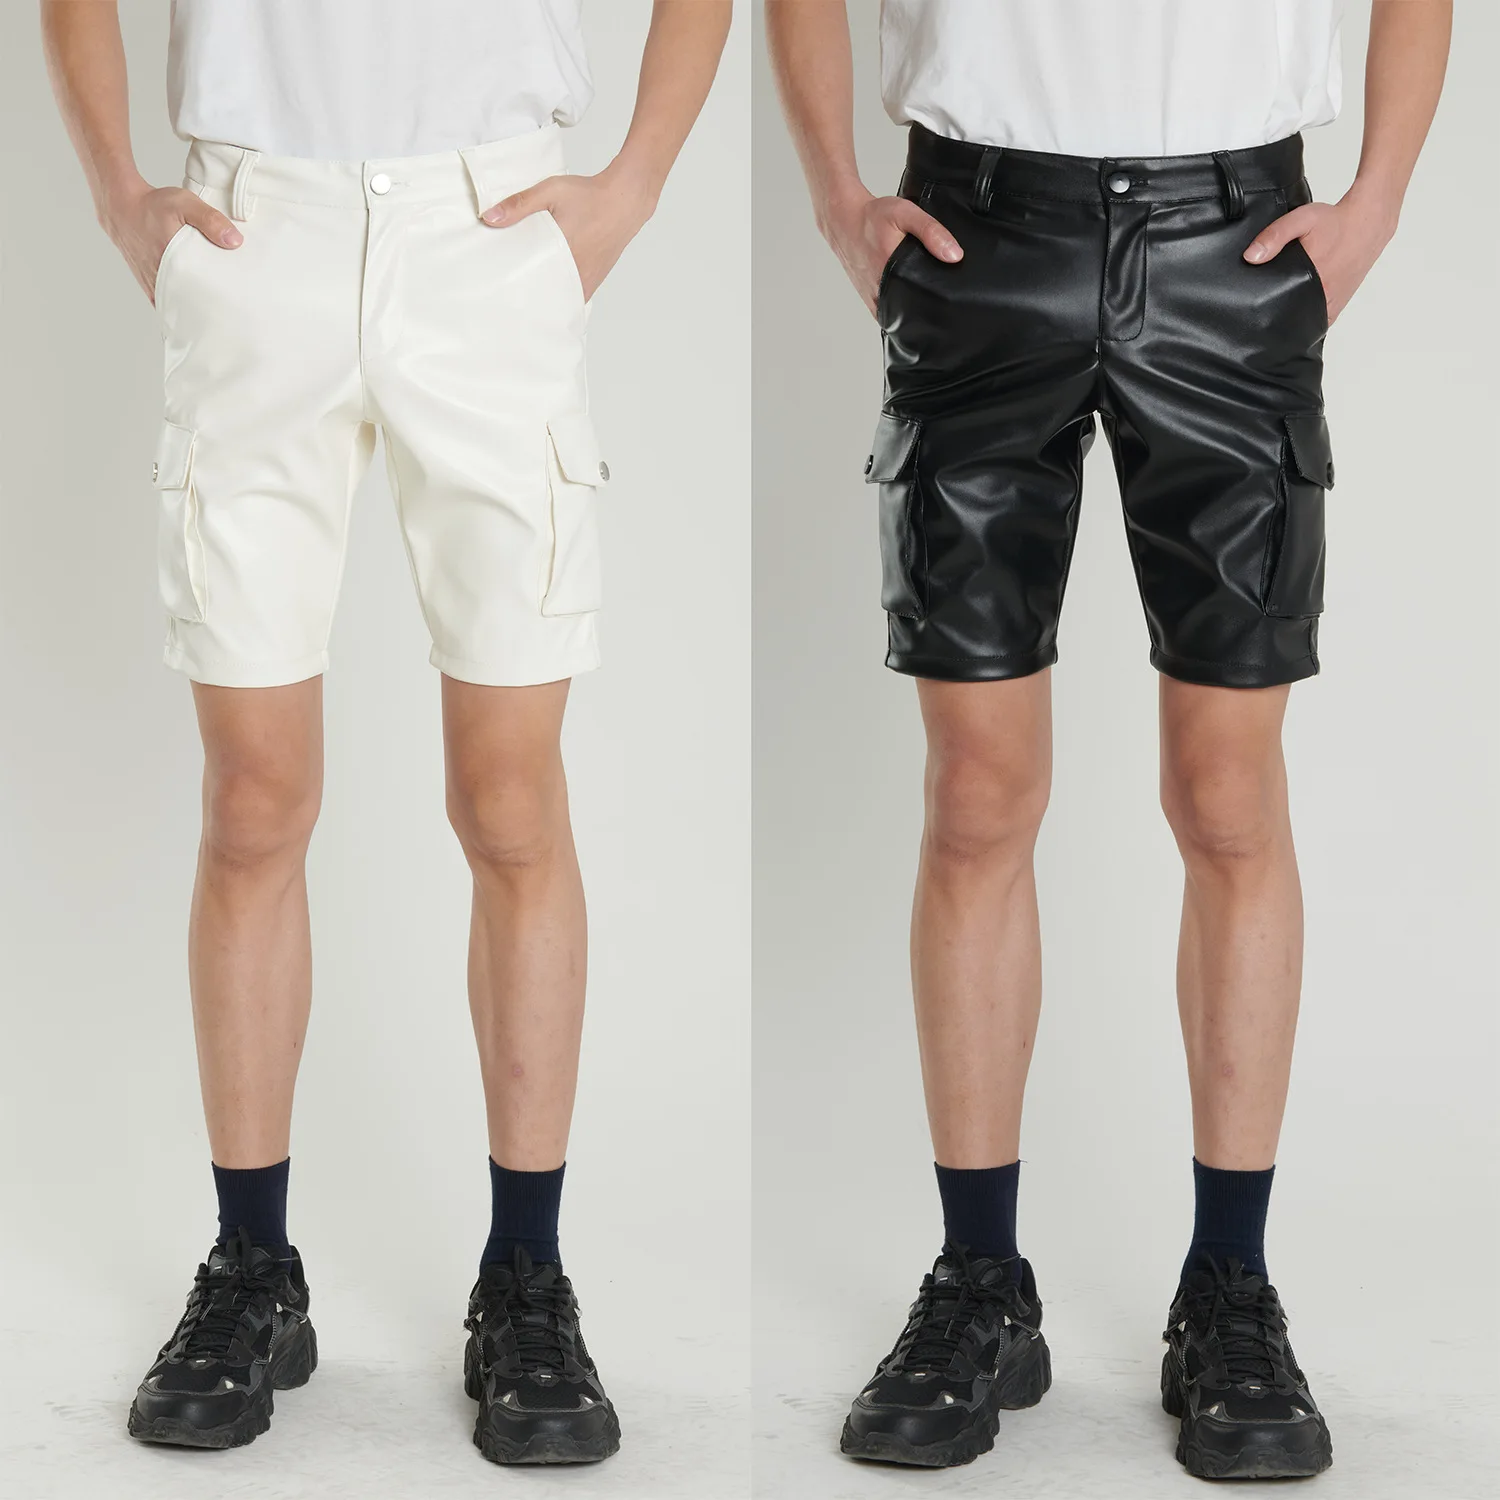 Summer thin young cross-border leather pants men's stretch white black leather pants men's fashion shorts five pants